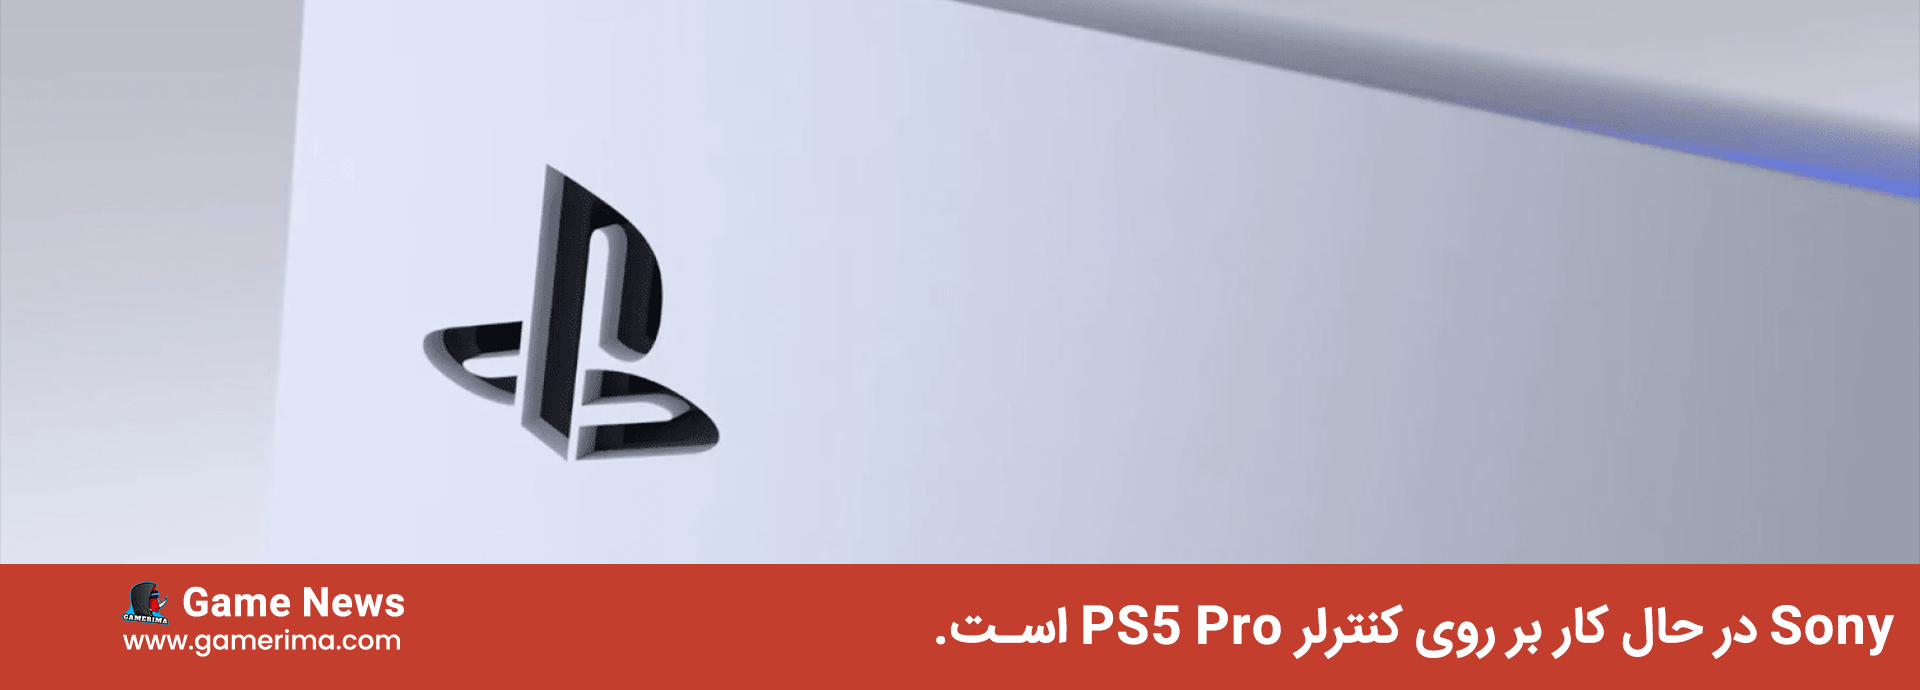 Sony در حال کار بر روی کنترلر PS5 Pro است.